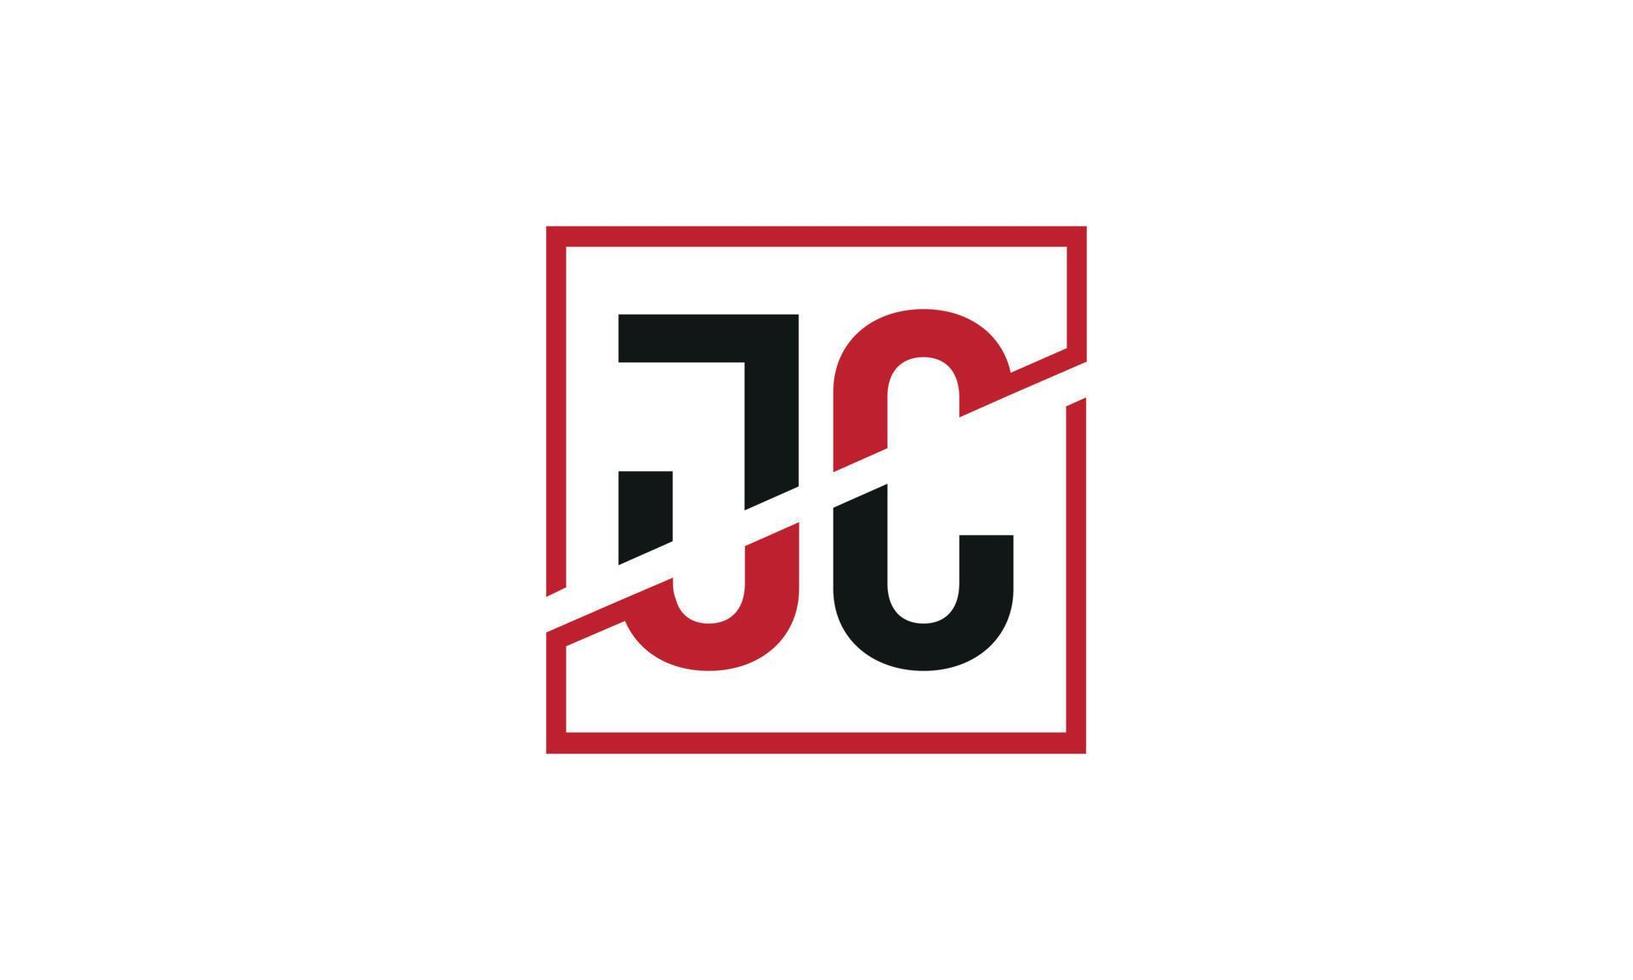 brief jc logo pro vector het dossier pro vector